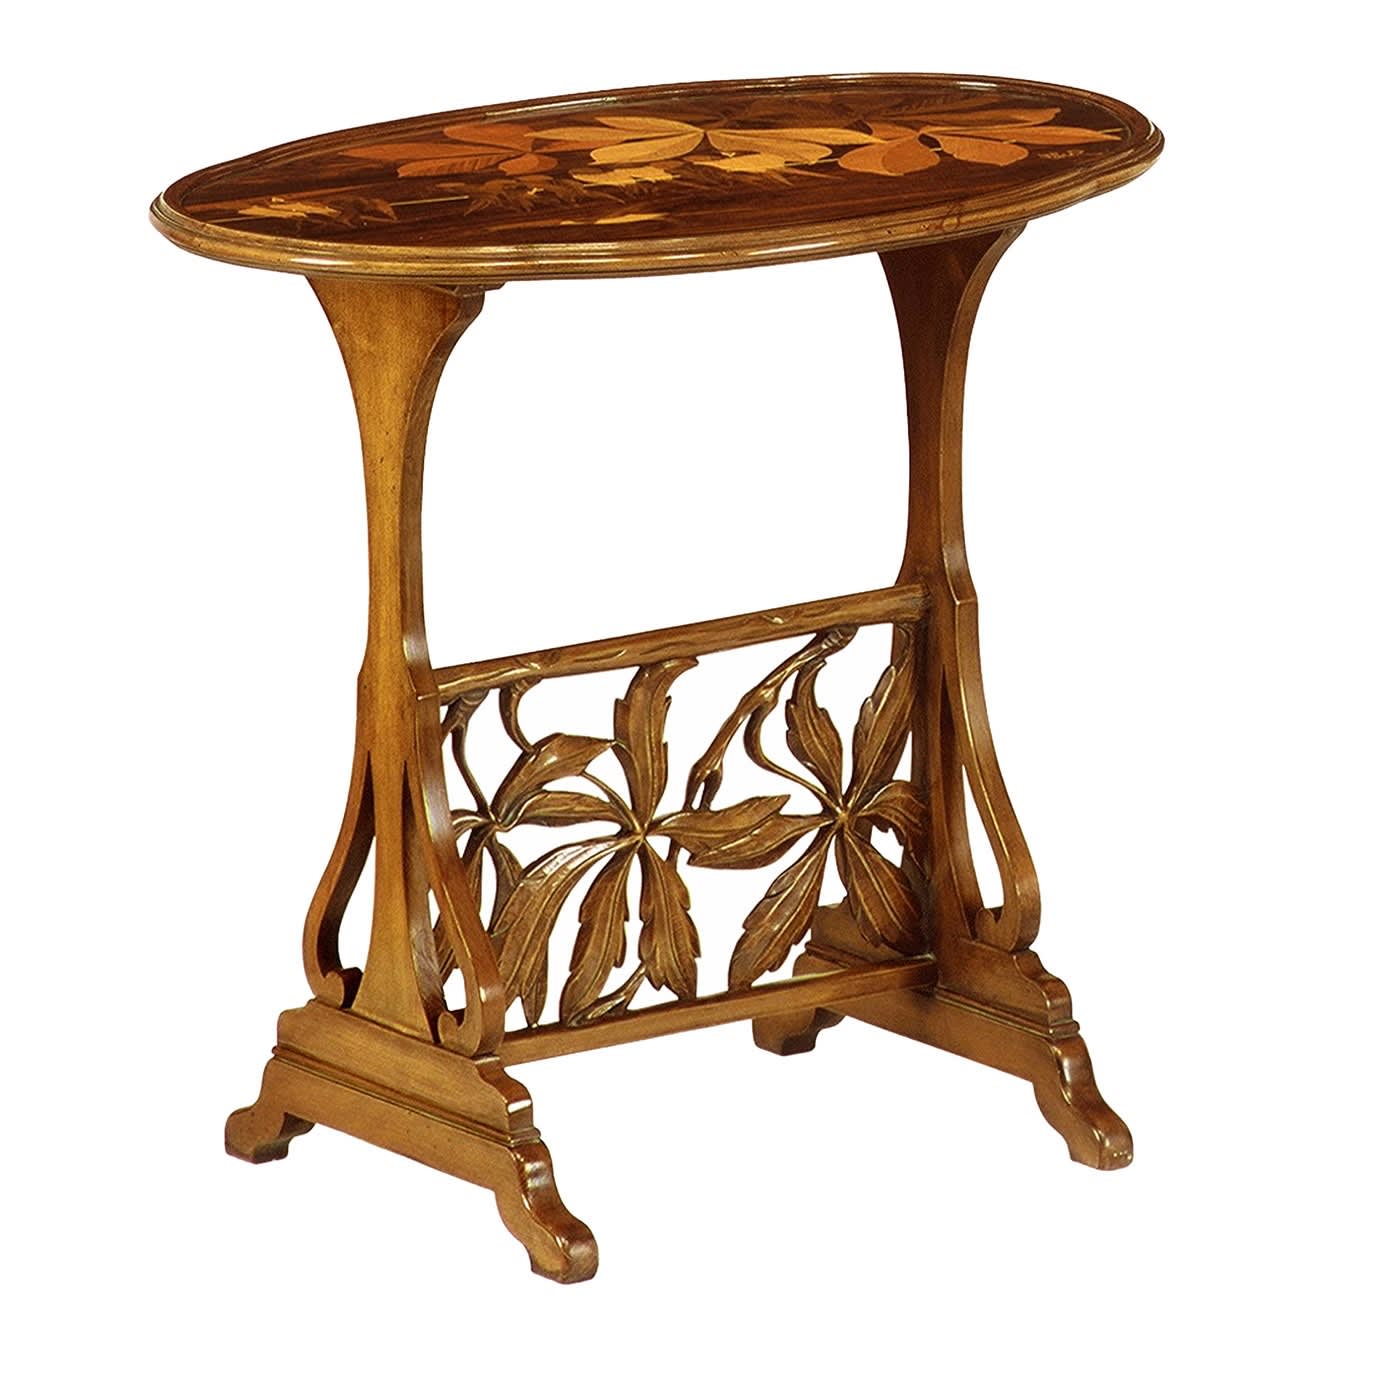 French Art Nouveau-Style Oval Inlaid Side Table by Emile Gallè - Cugini Lanzani